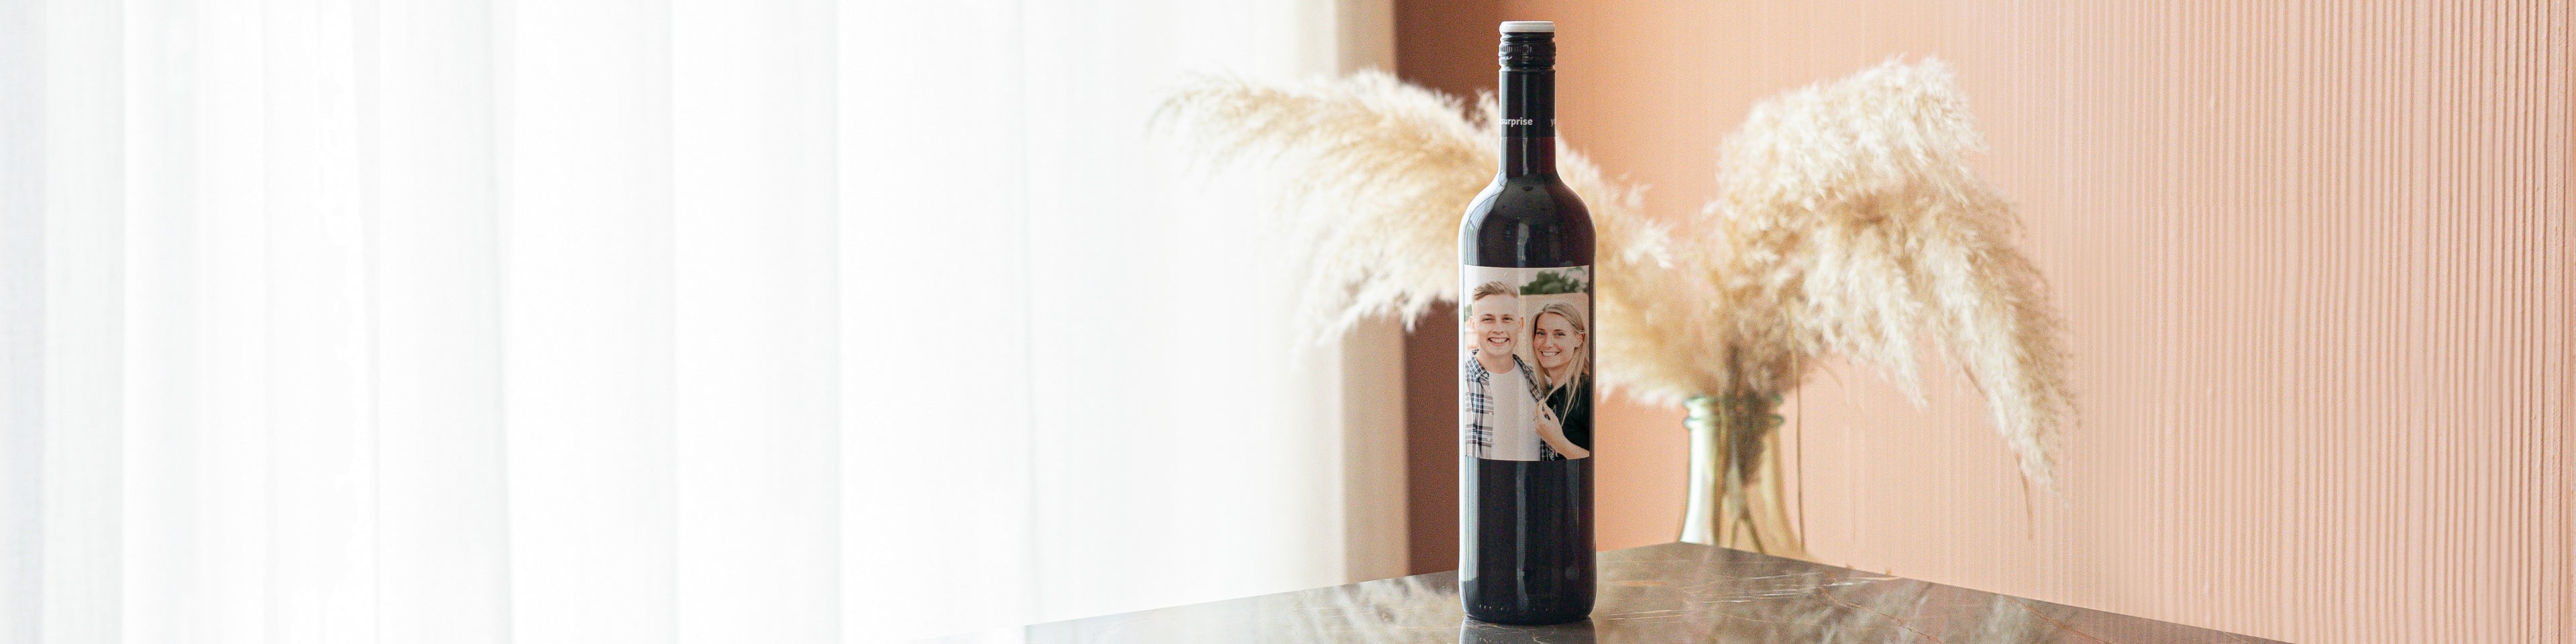 Wedding Role Sticker for Wine Glass Bottle Coat Hanger Hen Party DIY Gift/Favour 